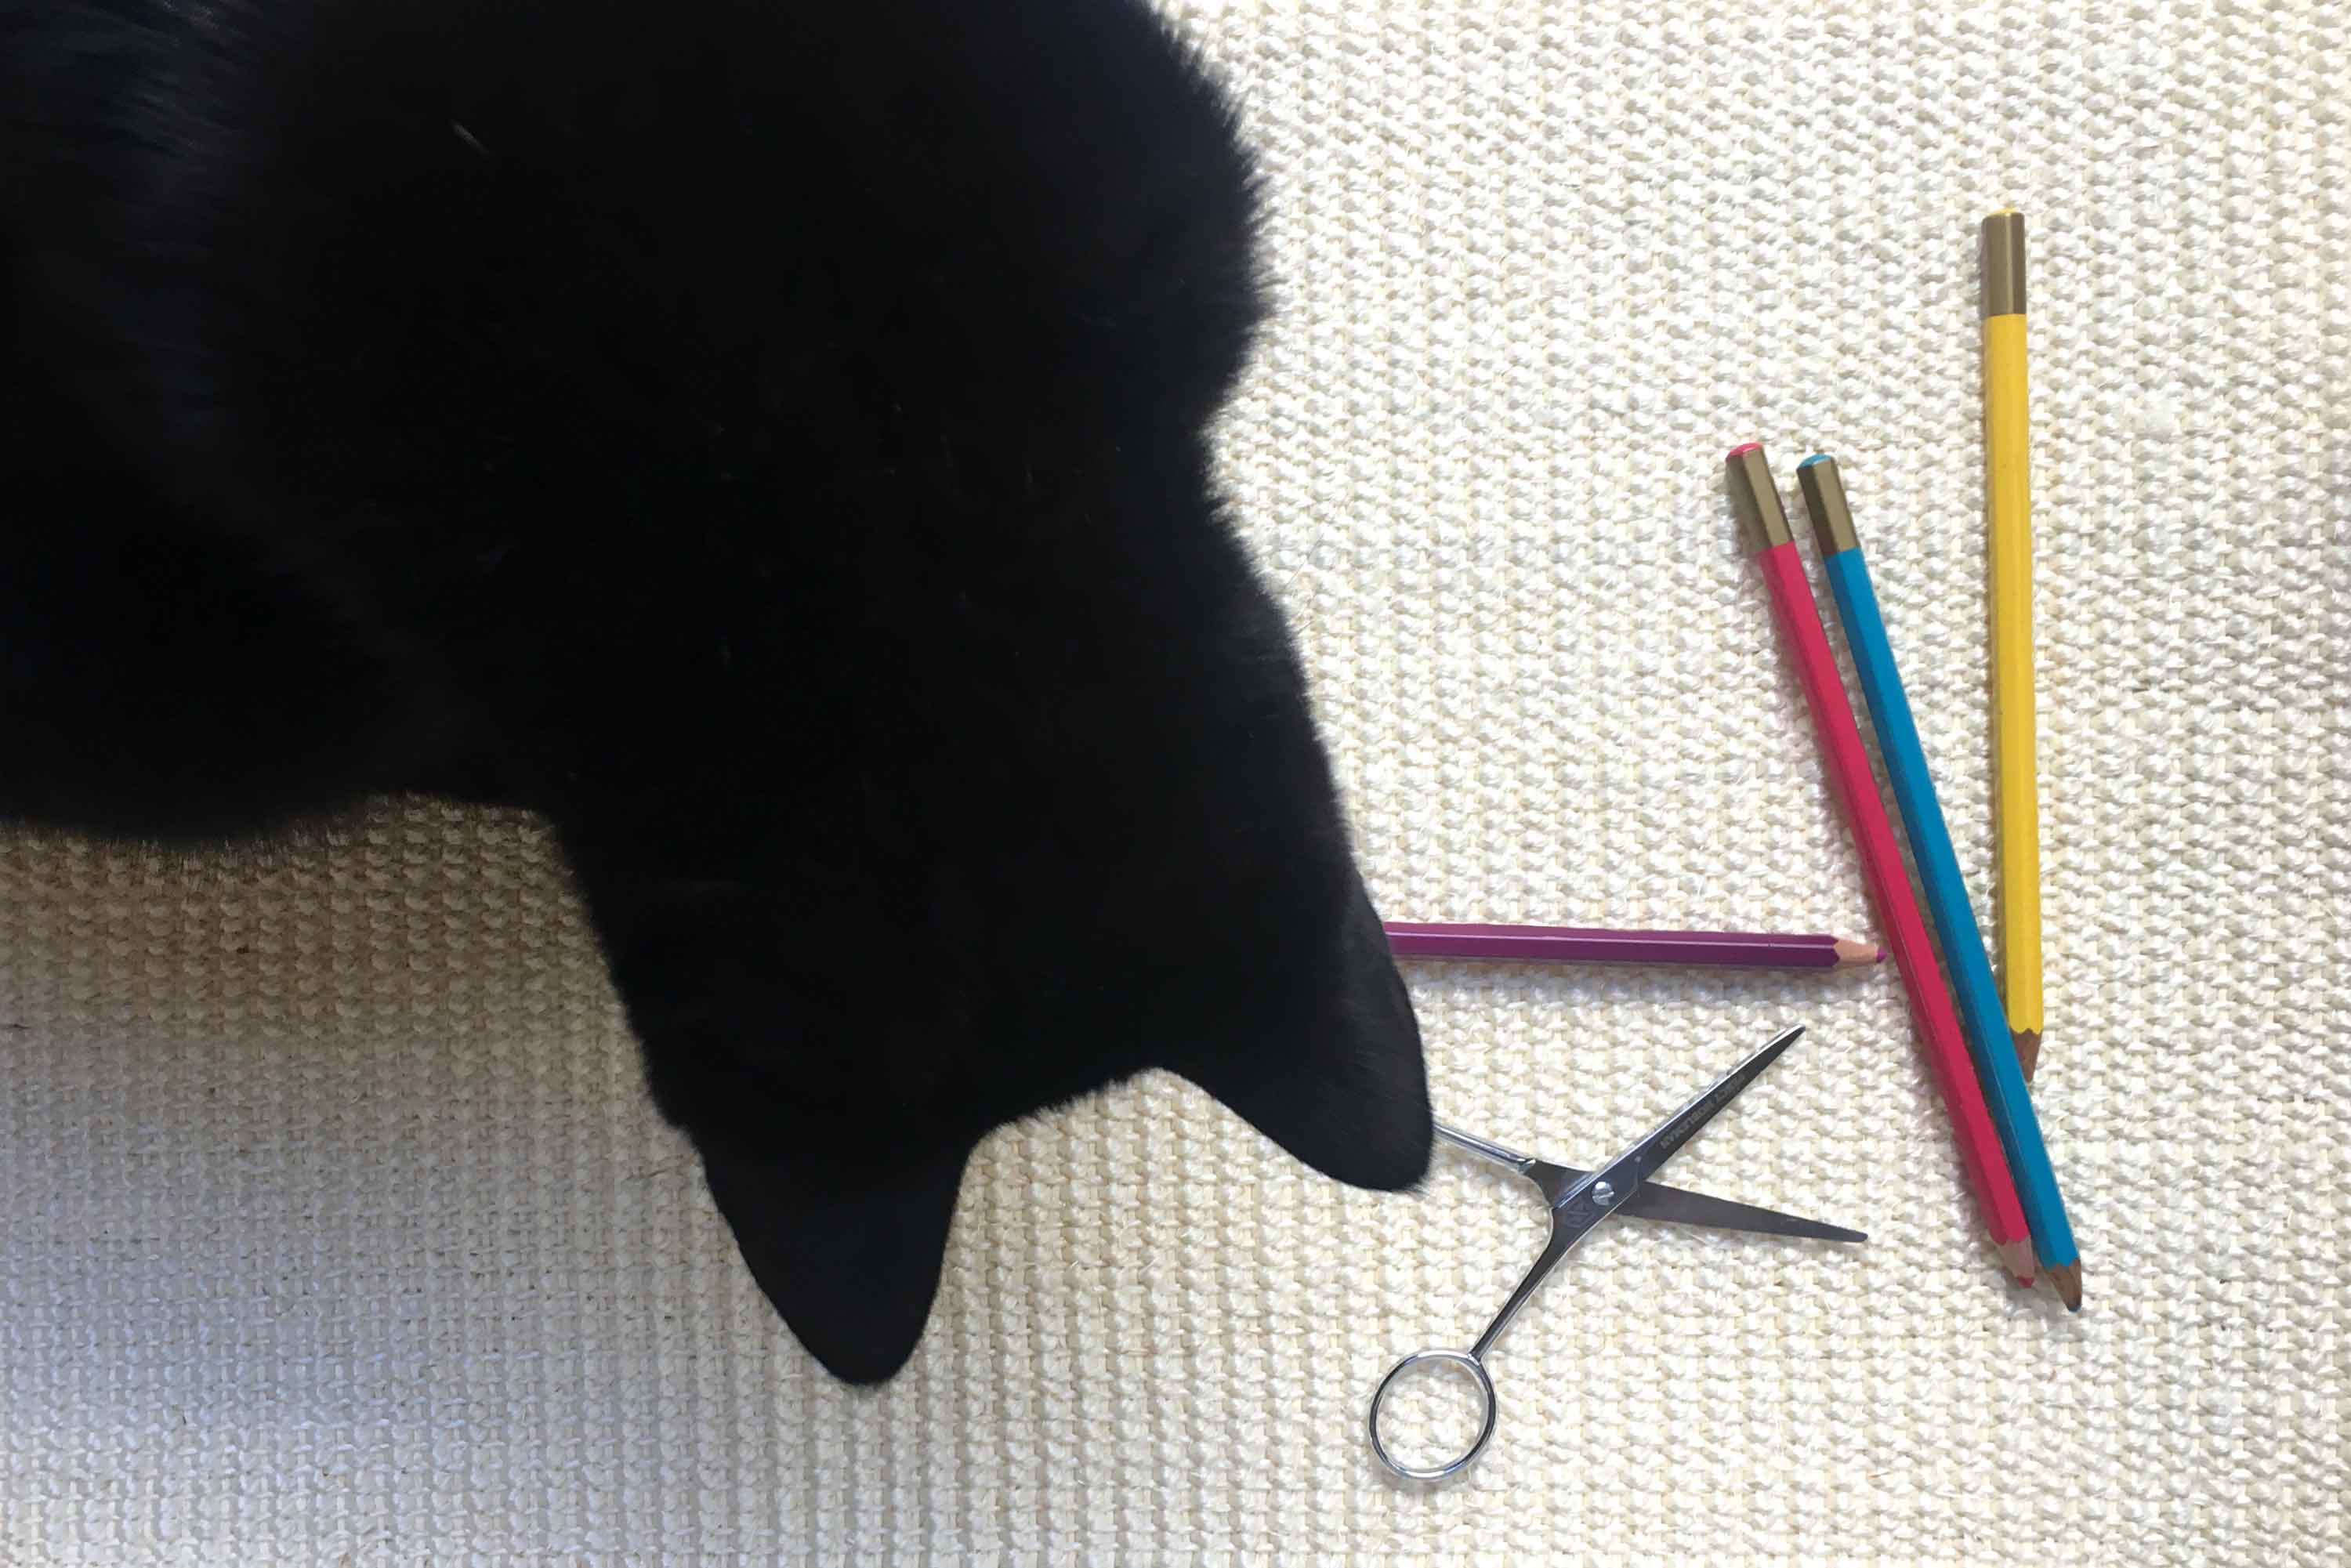 Black cat on sisal fabric